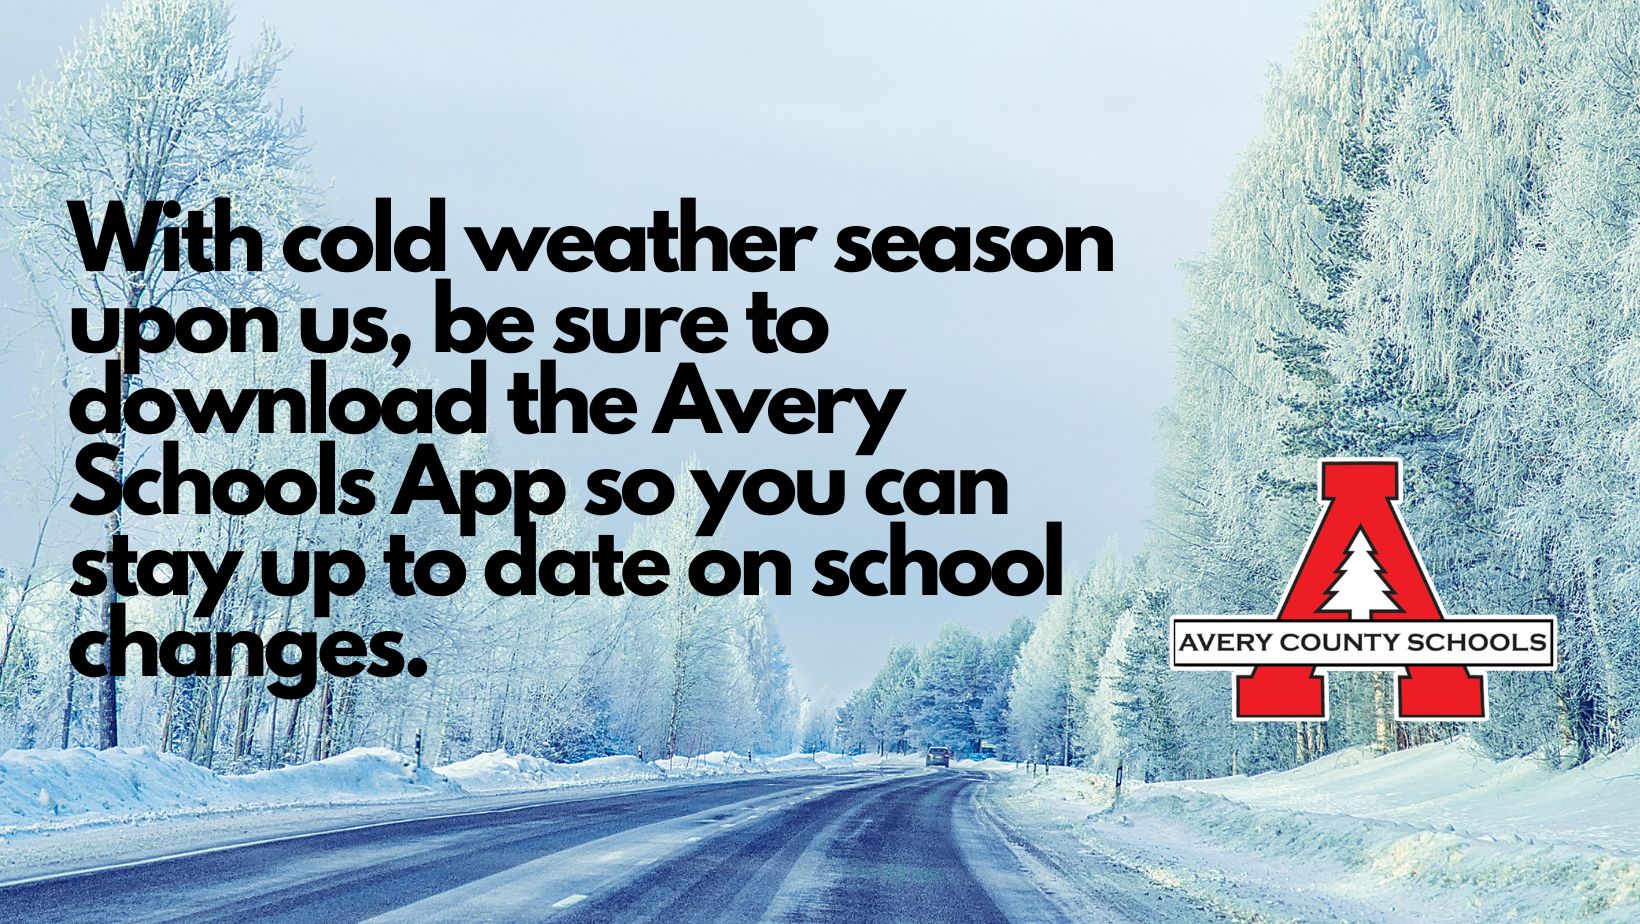 Download the Avery Schools app